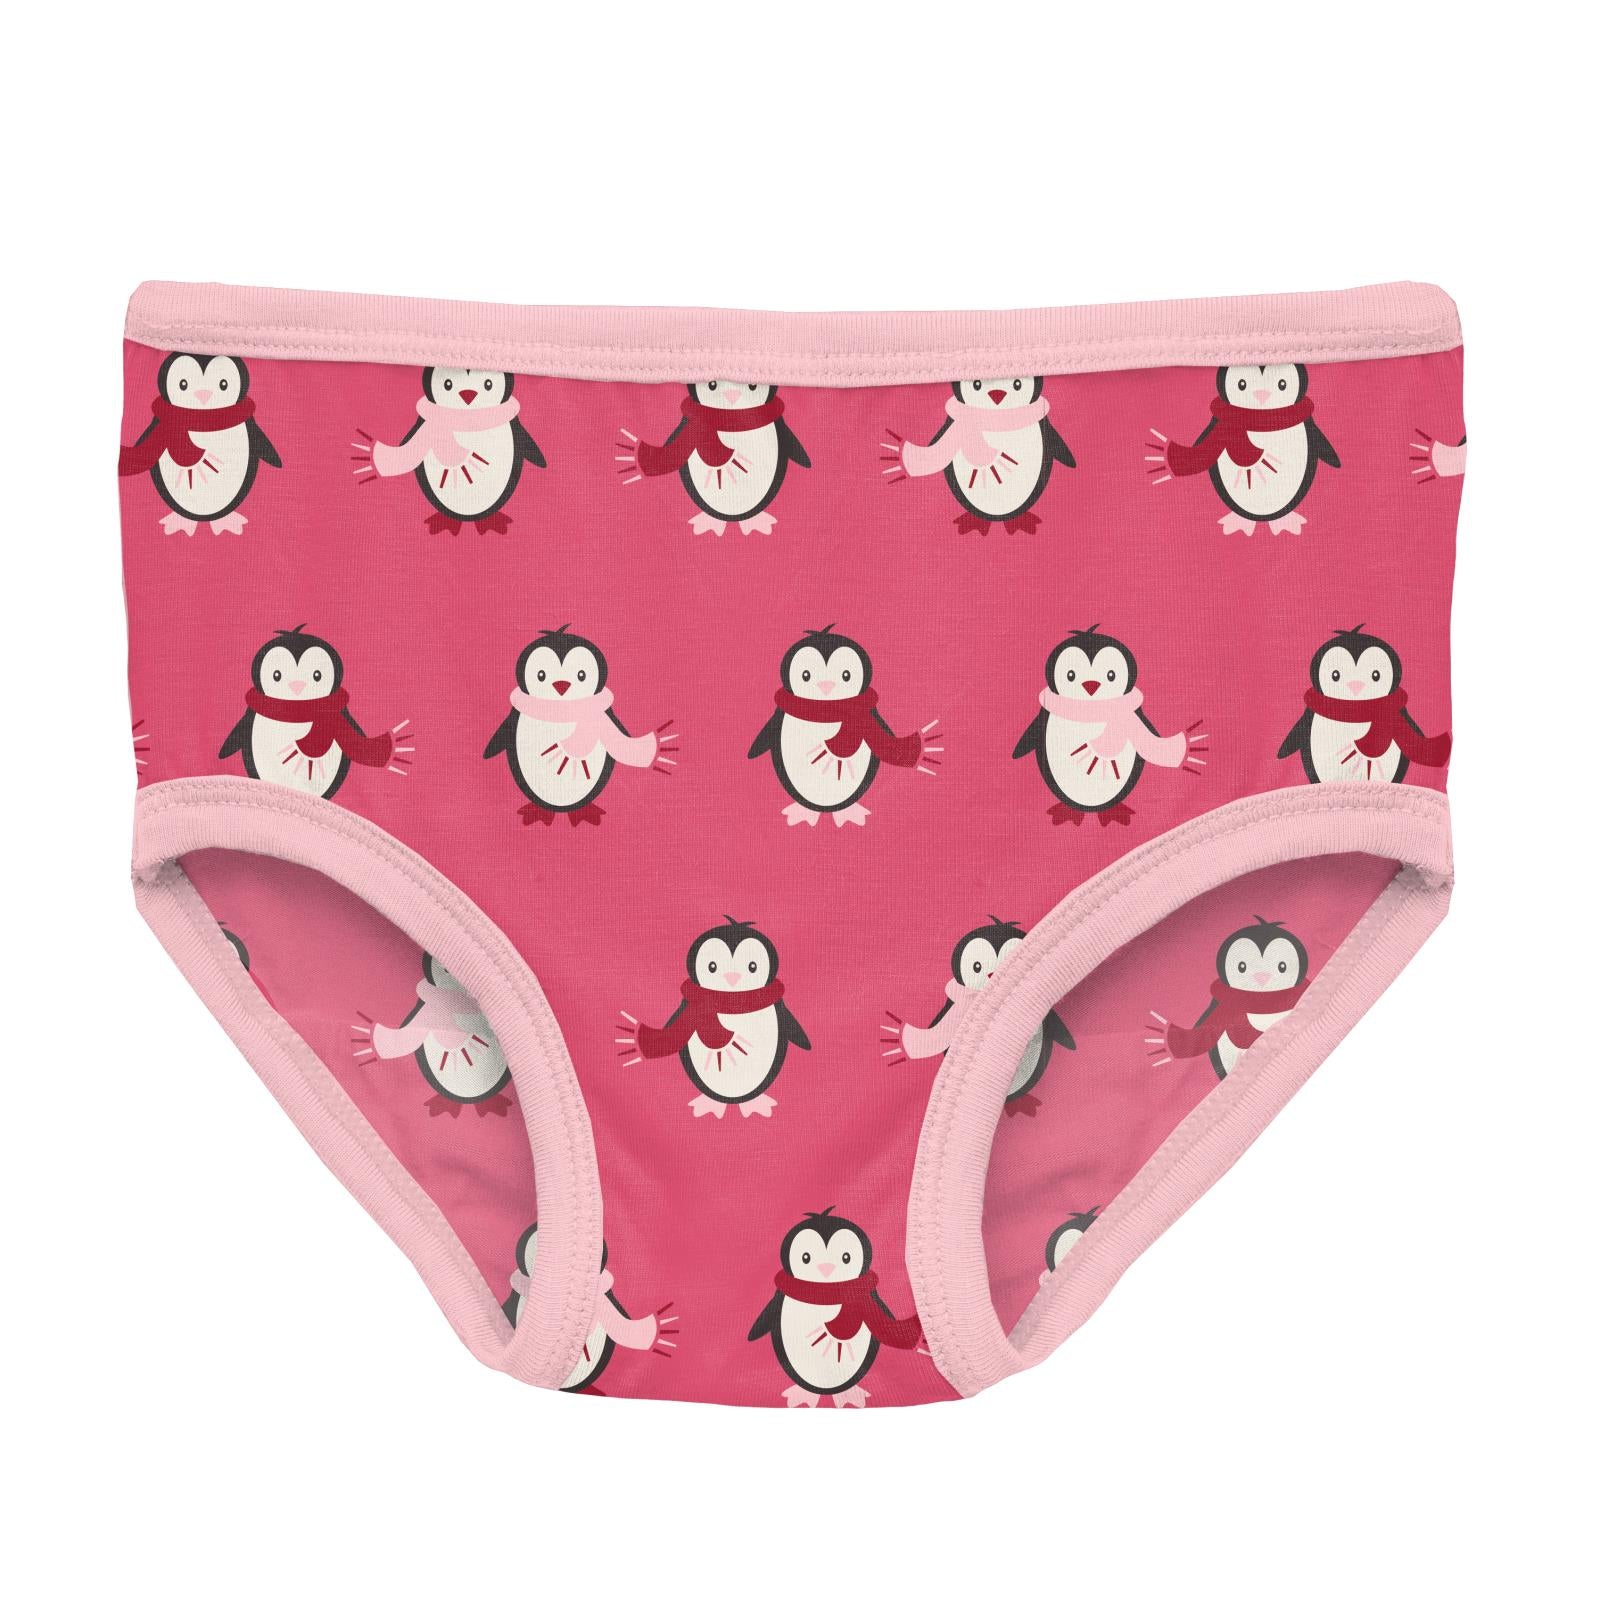 Print Girl's Underwear in Winter Rose Penguins